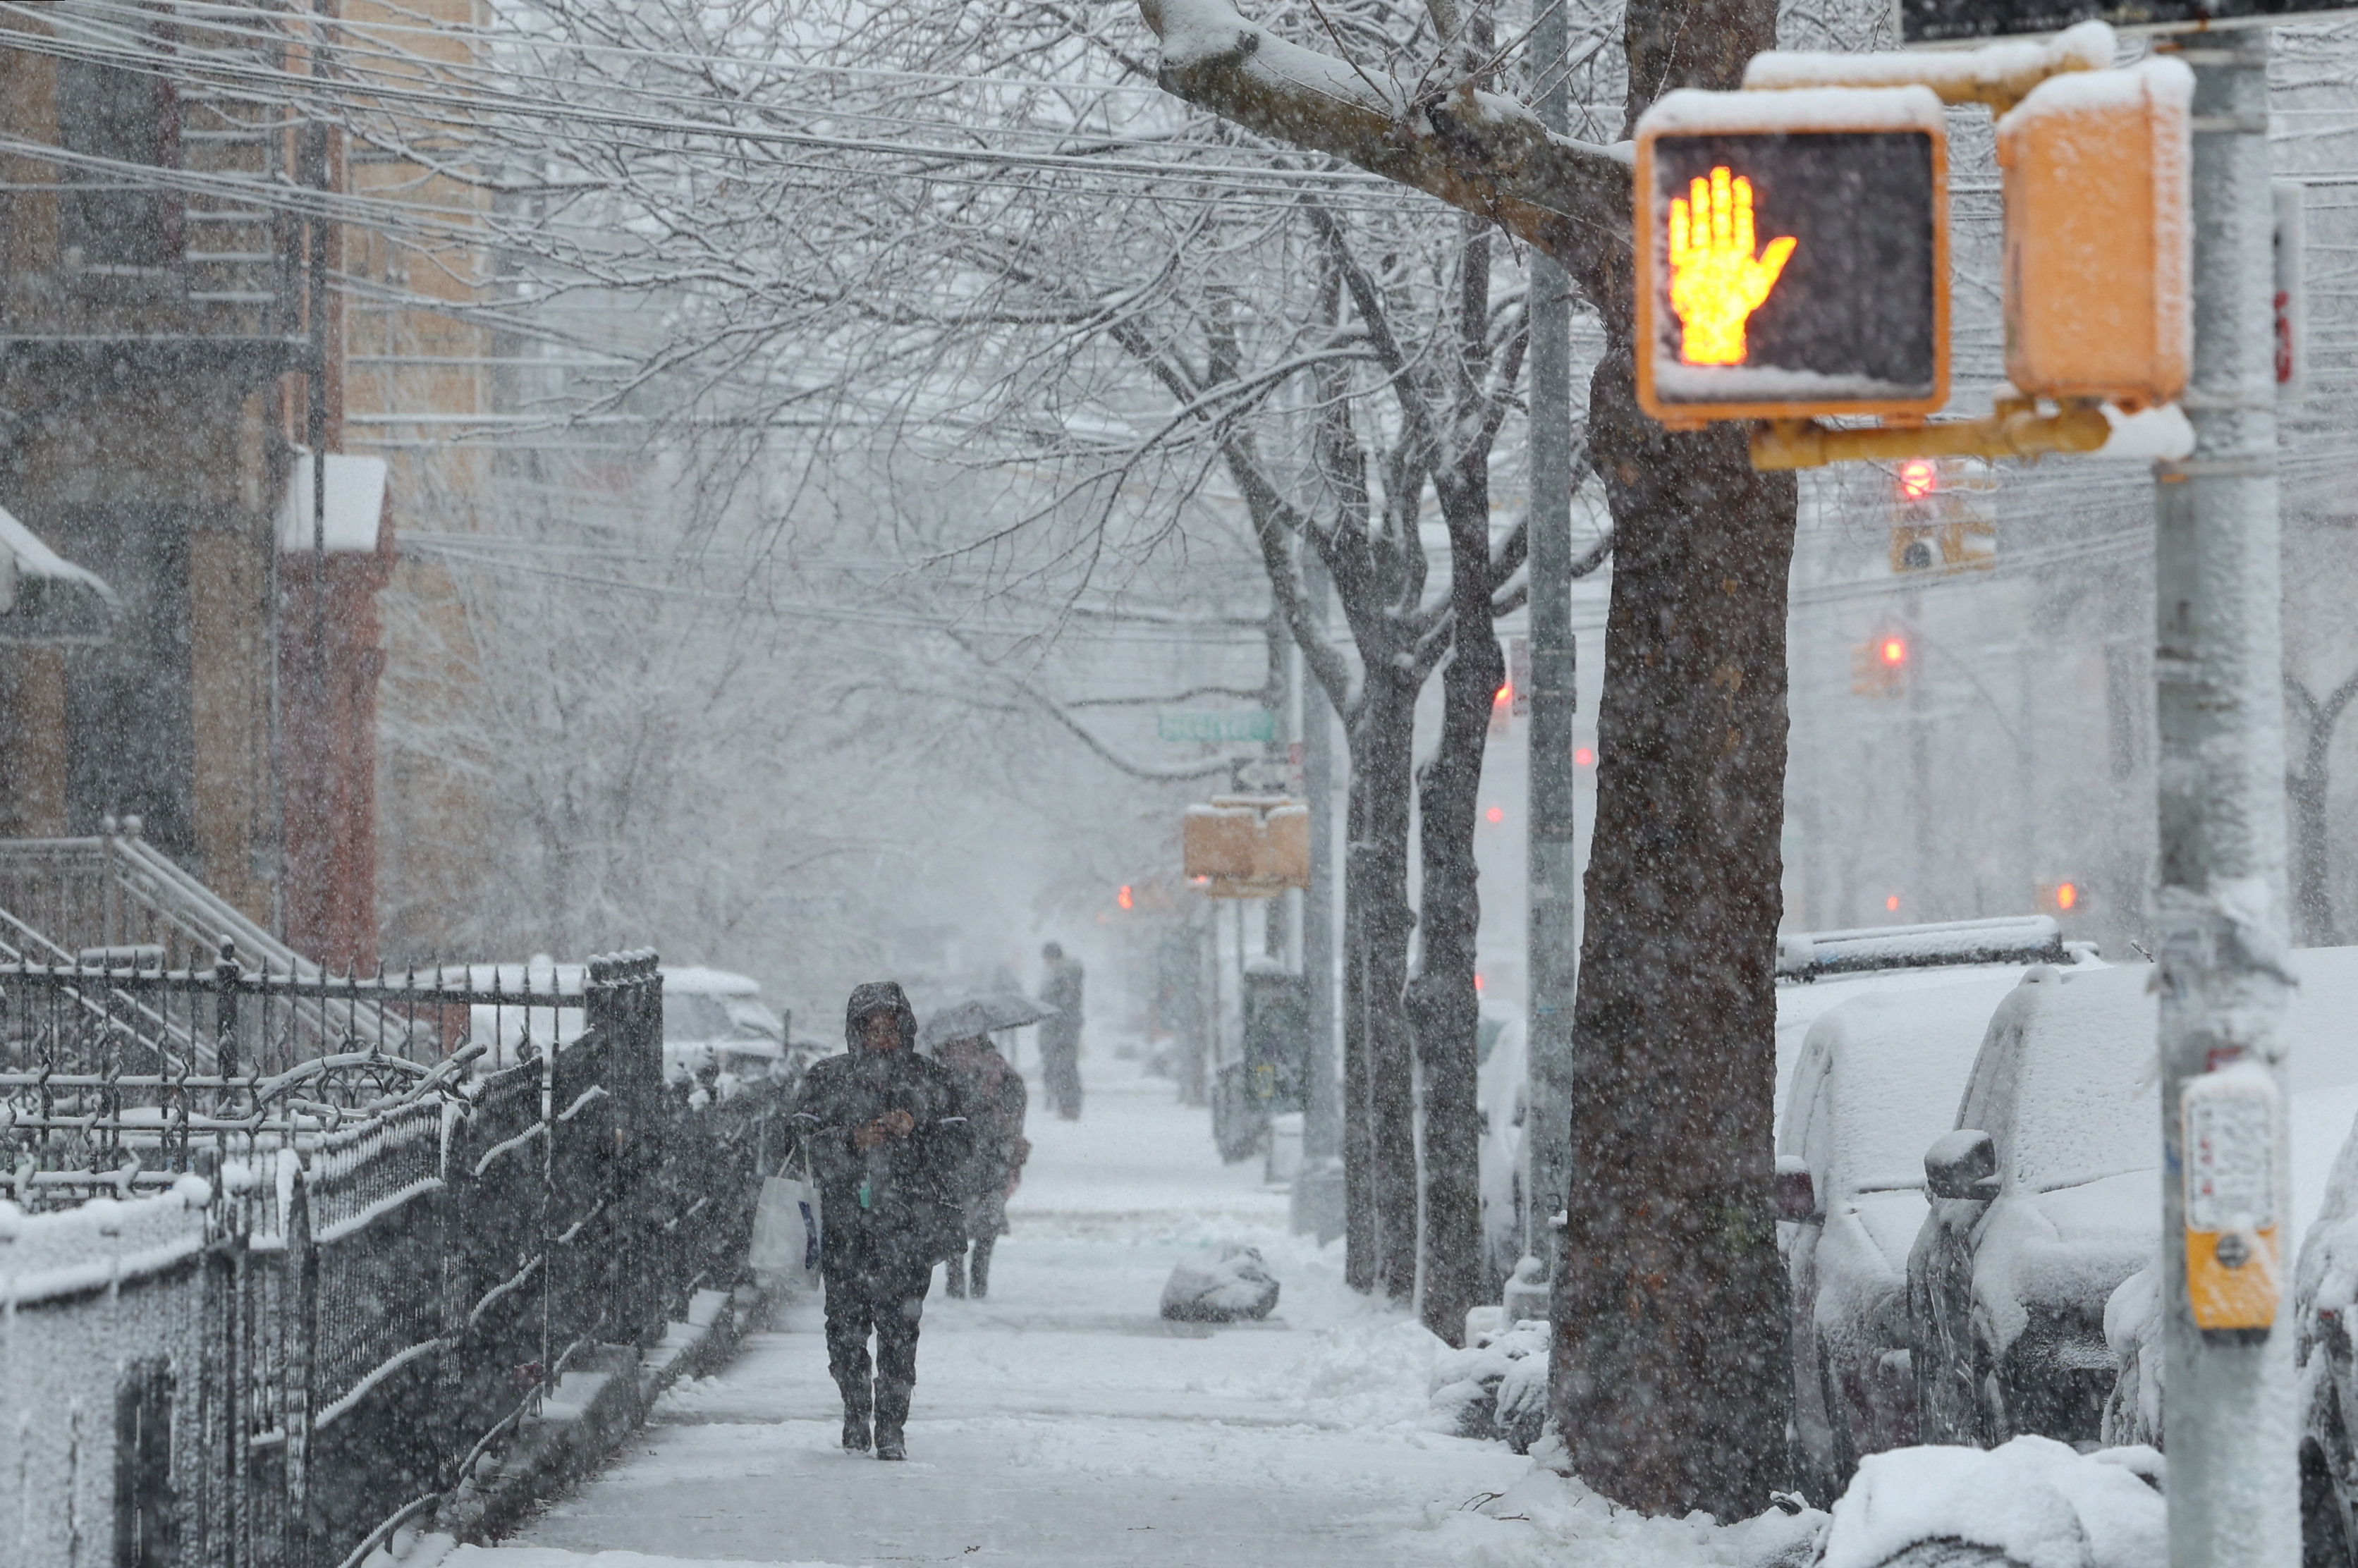 New York may finally break Hawaii’s snowfall record